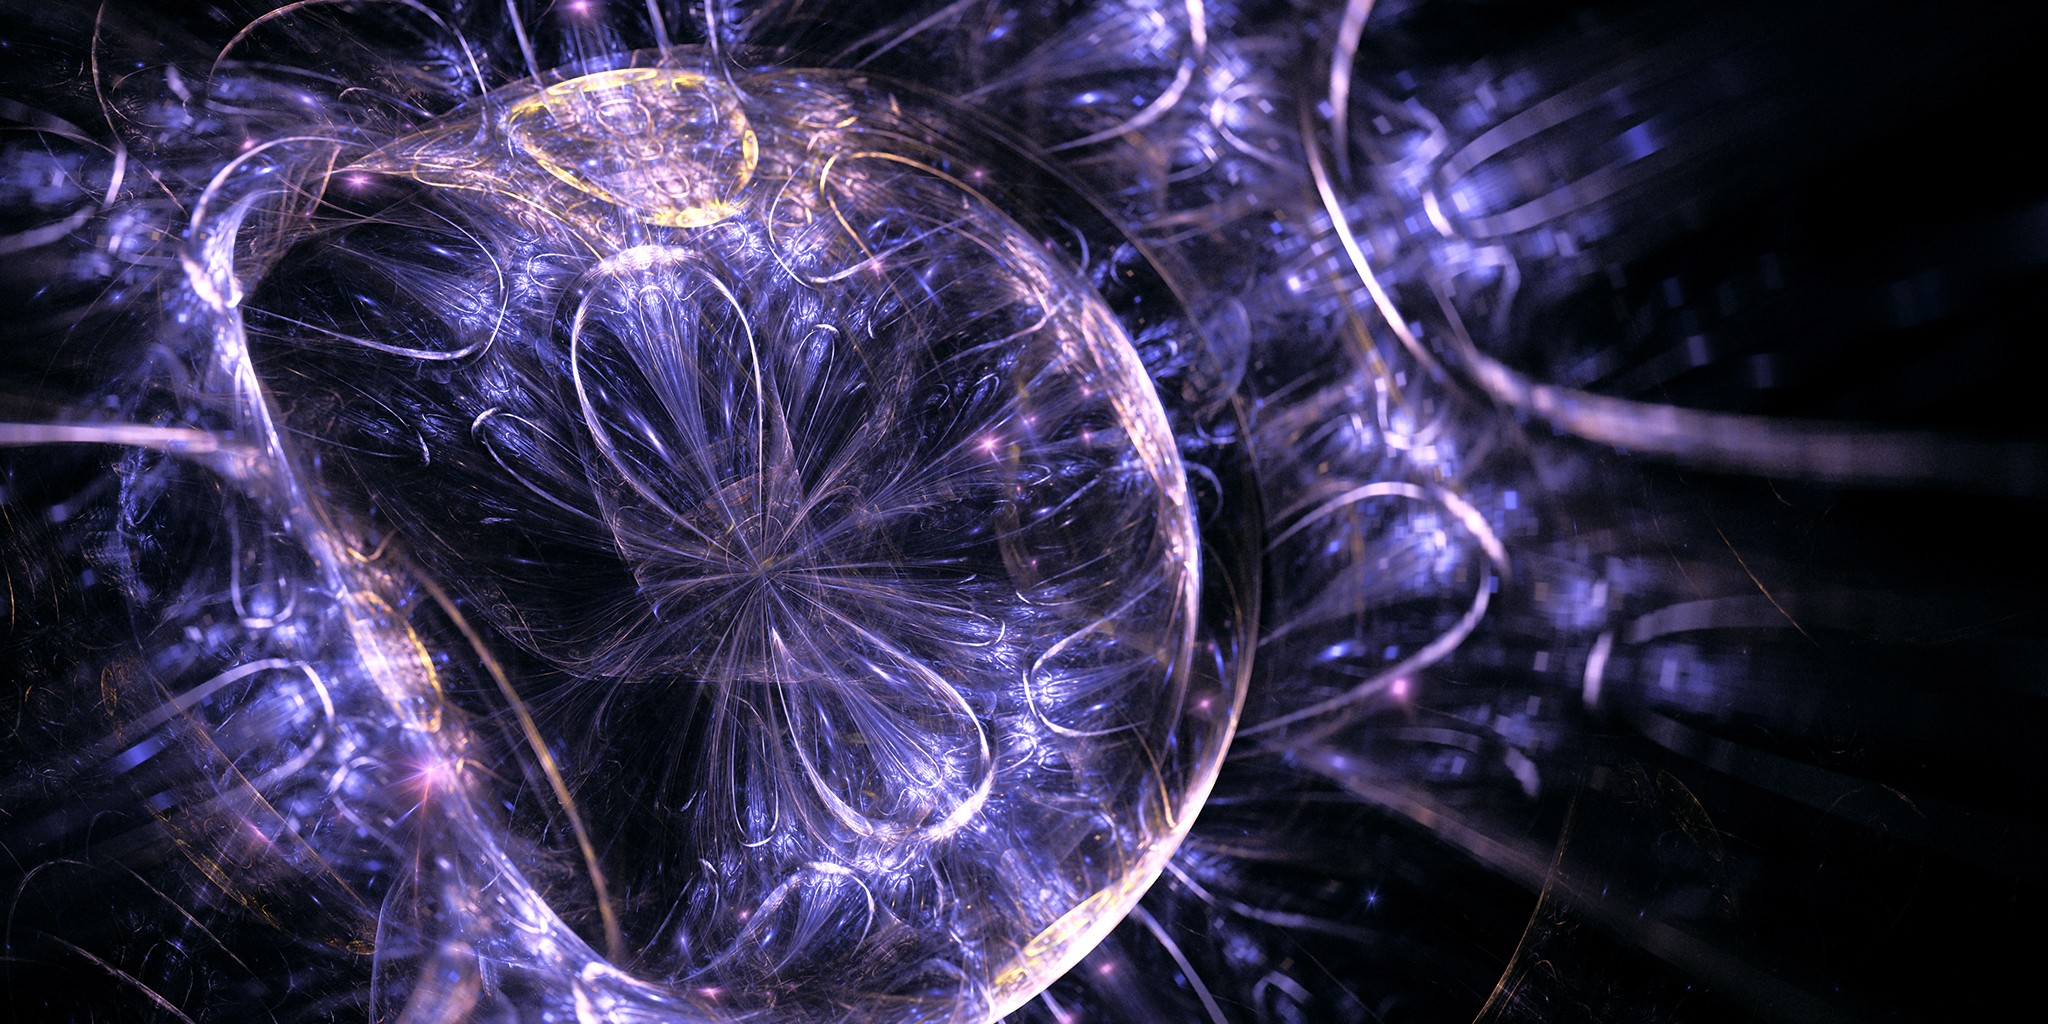 General 2048x1024 fractal Apophysis digital art CGI gold abstract sphere violet